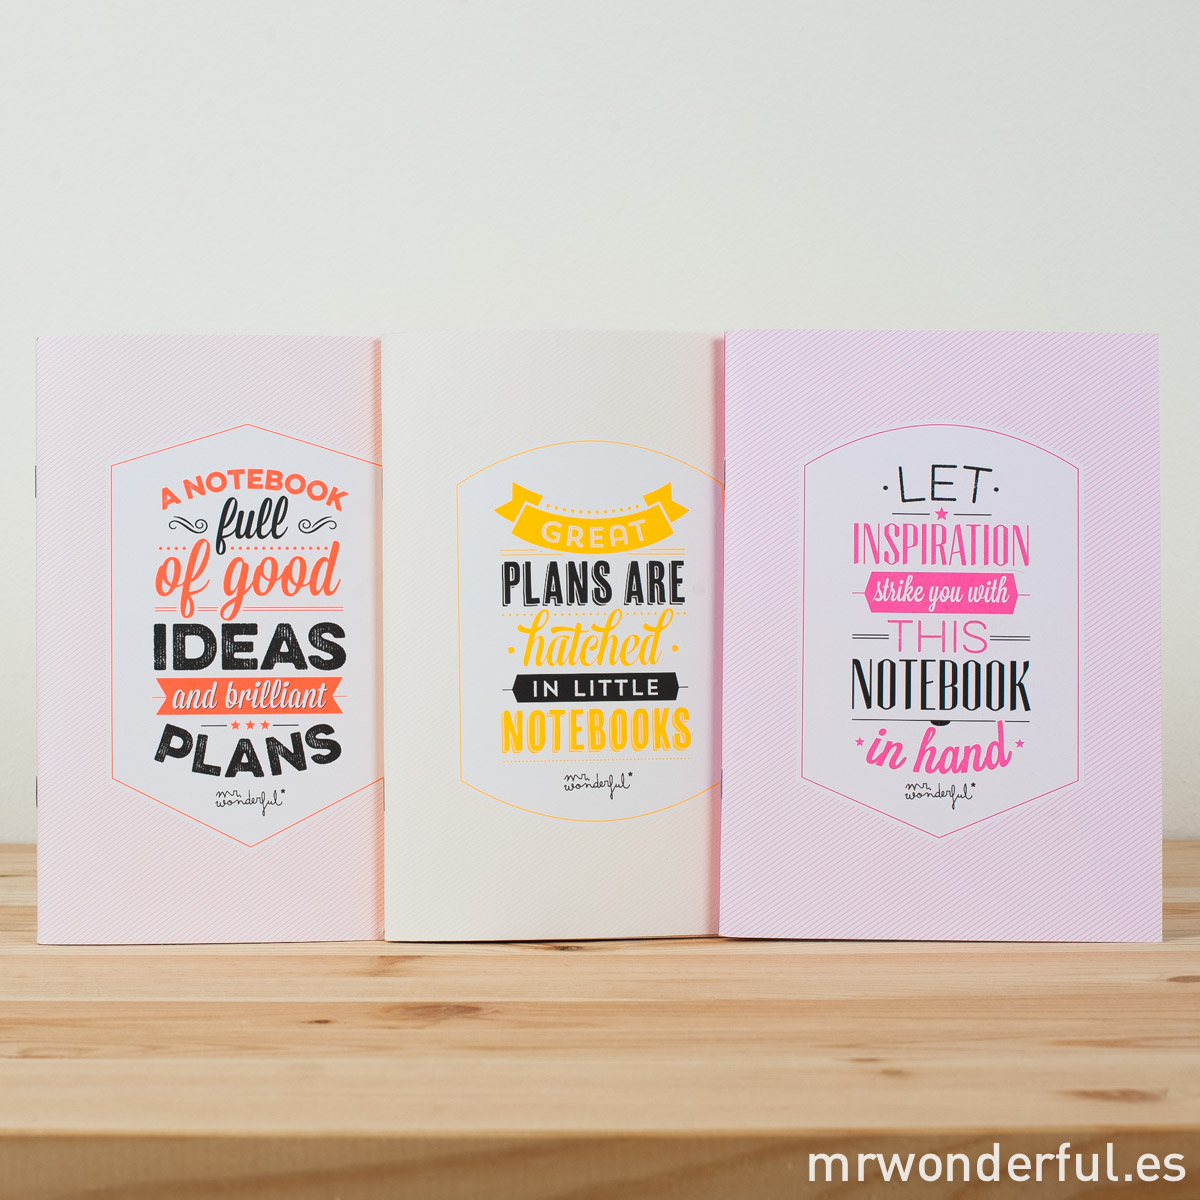 mrwonderful_lib28_libretas-stunning-notebooks-for-the-best-ideas-1